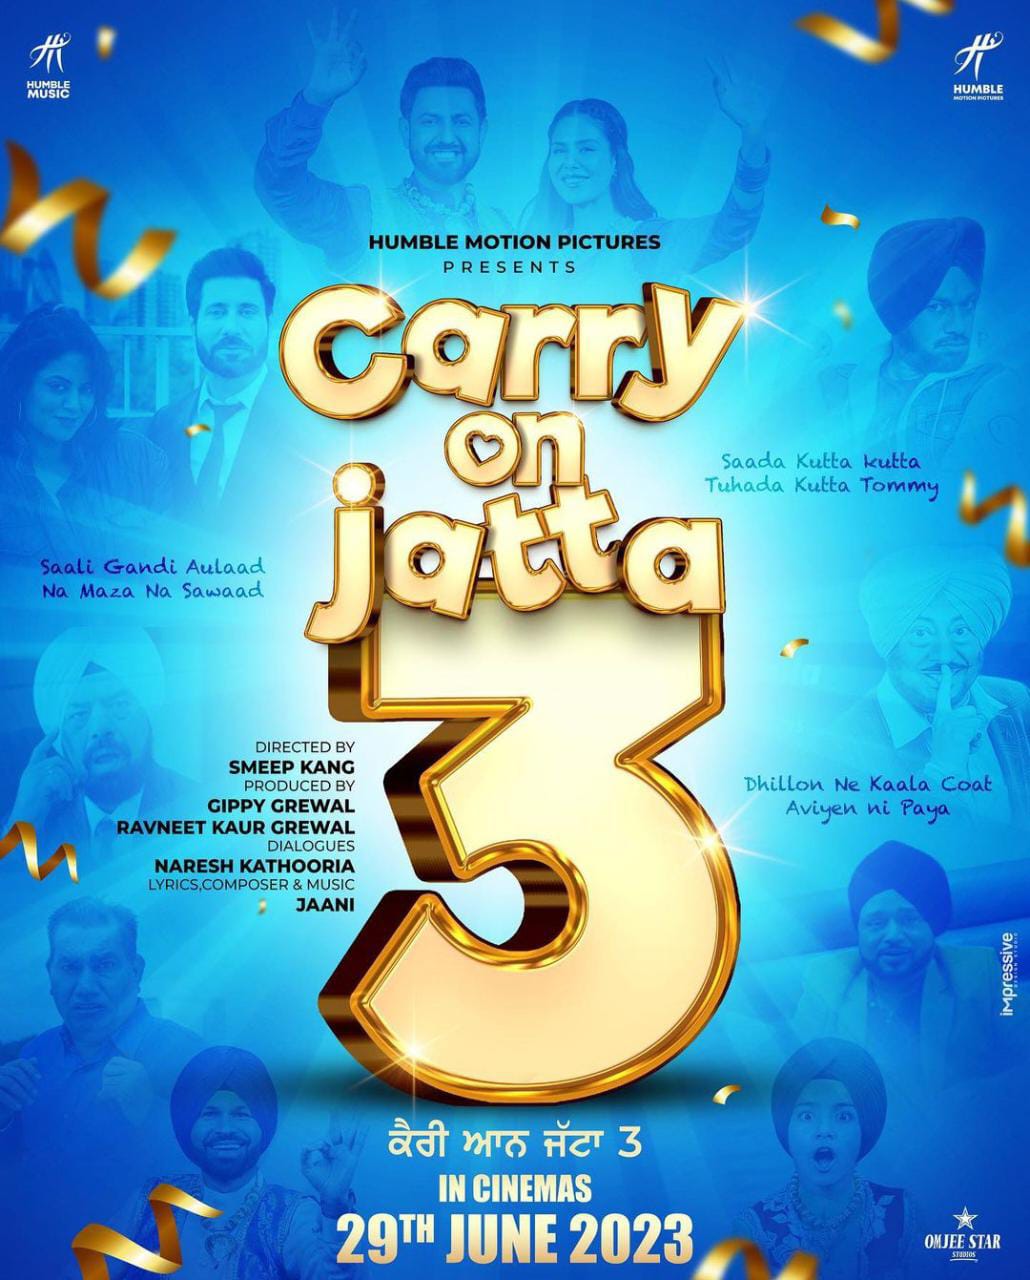 Carry On Jatta 3: 'ਕੈਰੀ ਆਨ ਜੱਟਾ 3' ਦਾ ਅਧਿਕਾਰਤ ਪੋਸਟਰ ਰਿਲੀਜ਼, 29 ਜੂਨ ਨੂੰ ਰਿਲੀਜ਼ ਲਈ ਤਿਆਰ